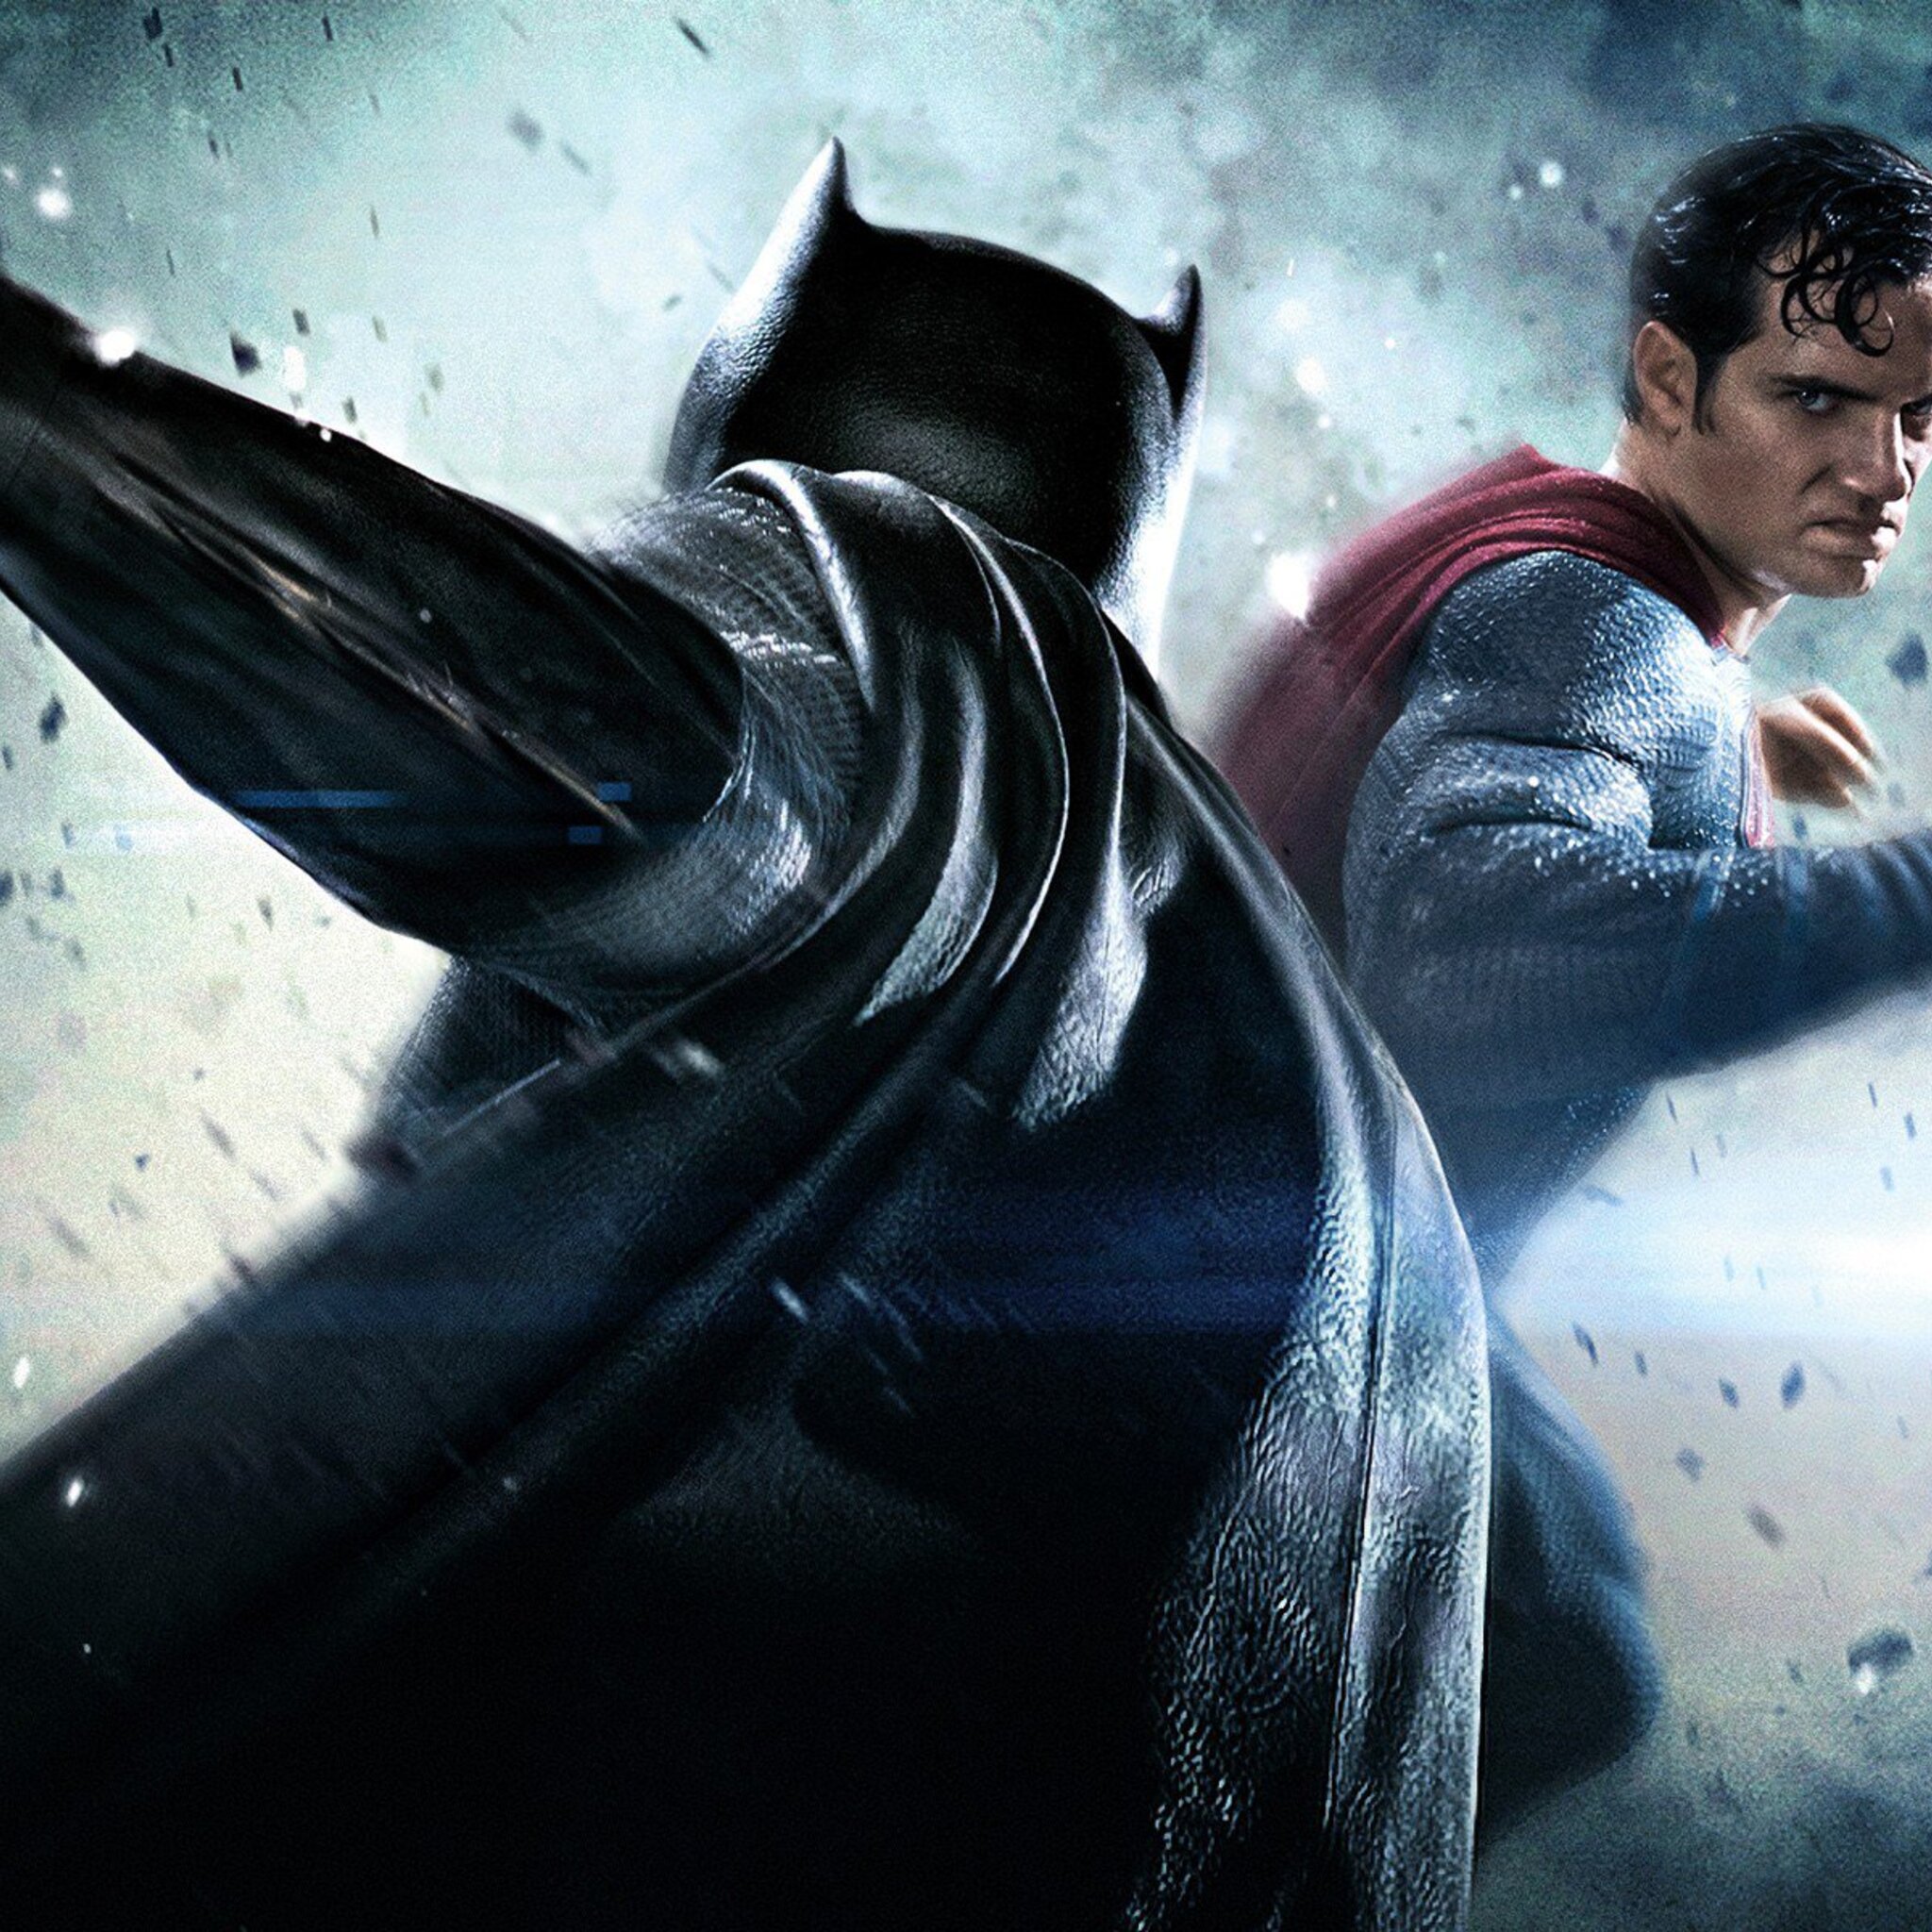 free for ios download Batman v Superman: Dawn of Justice